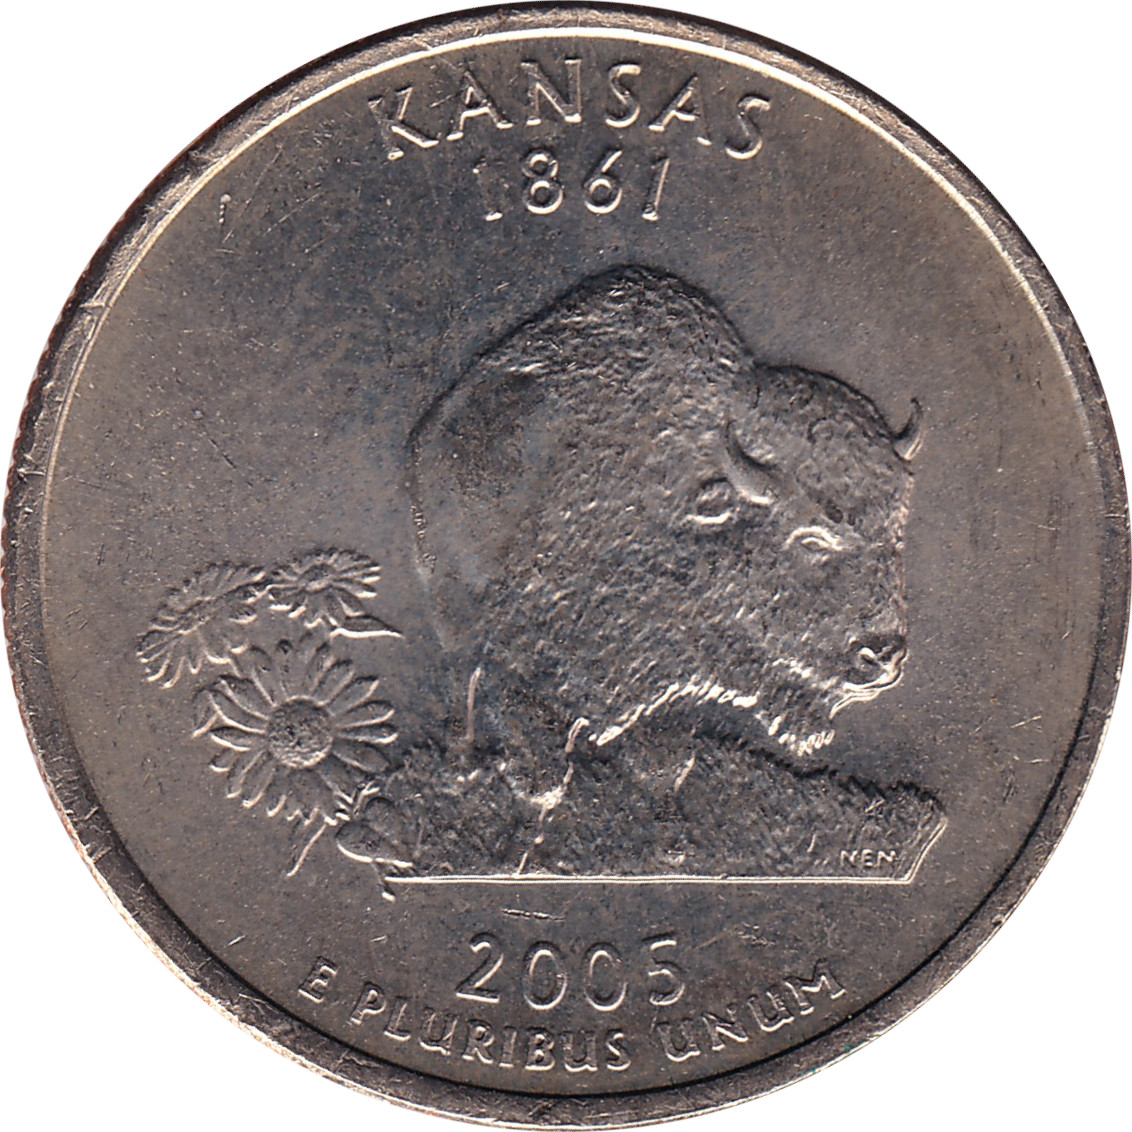 1/4 dollar - Kansas